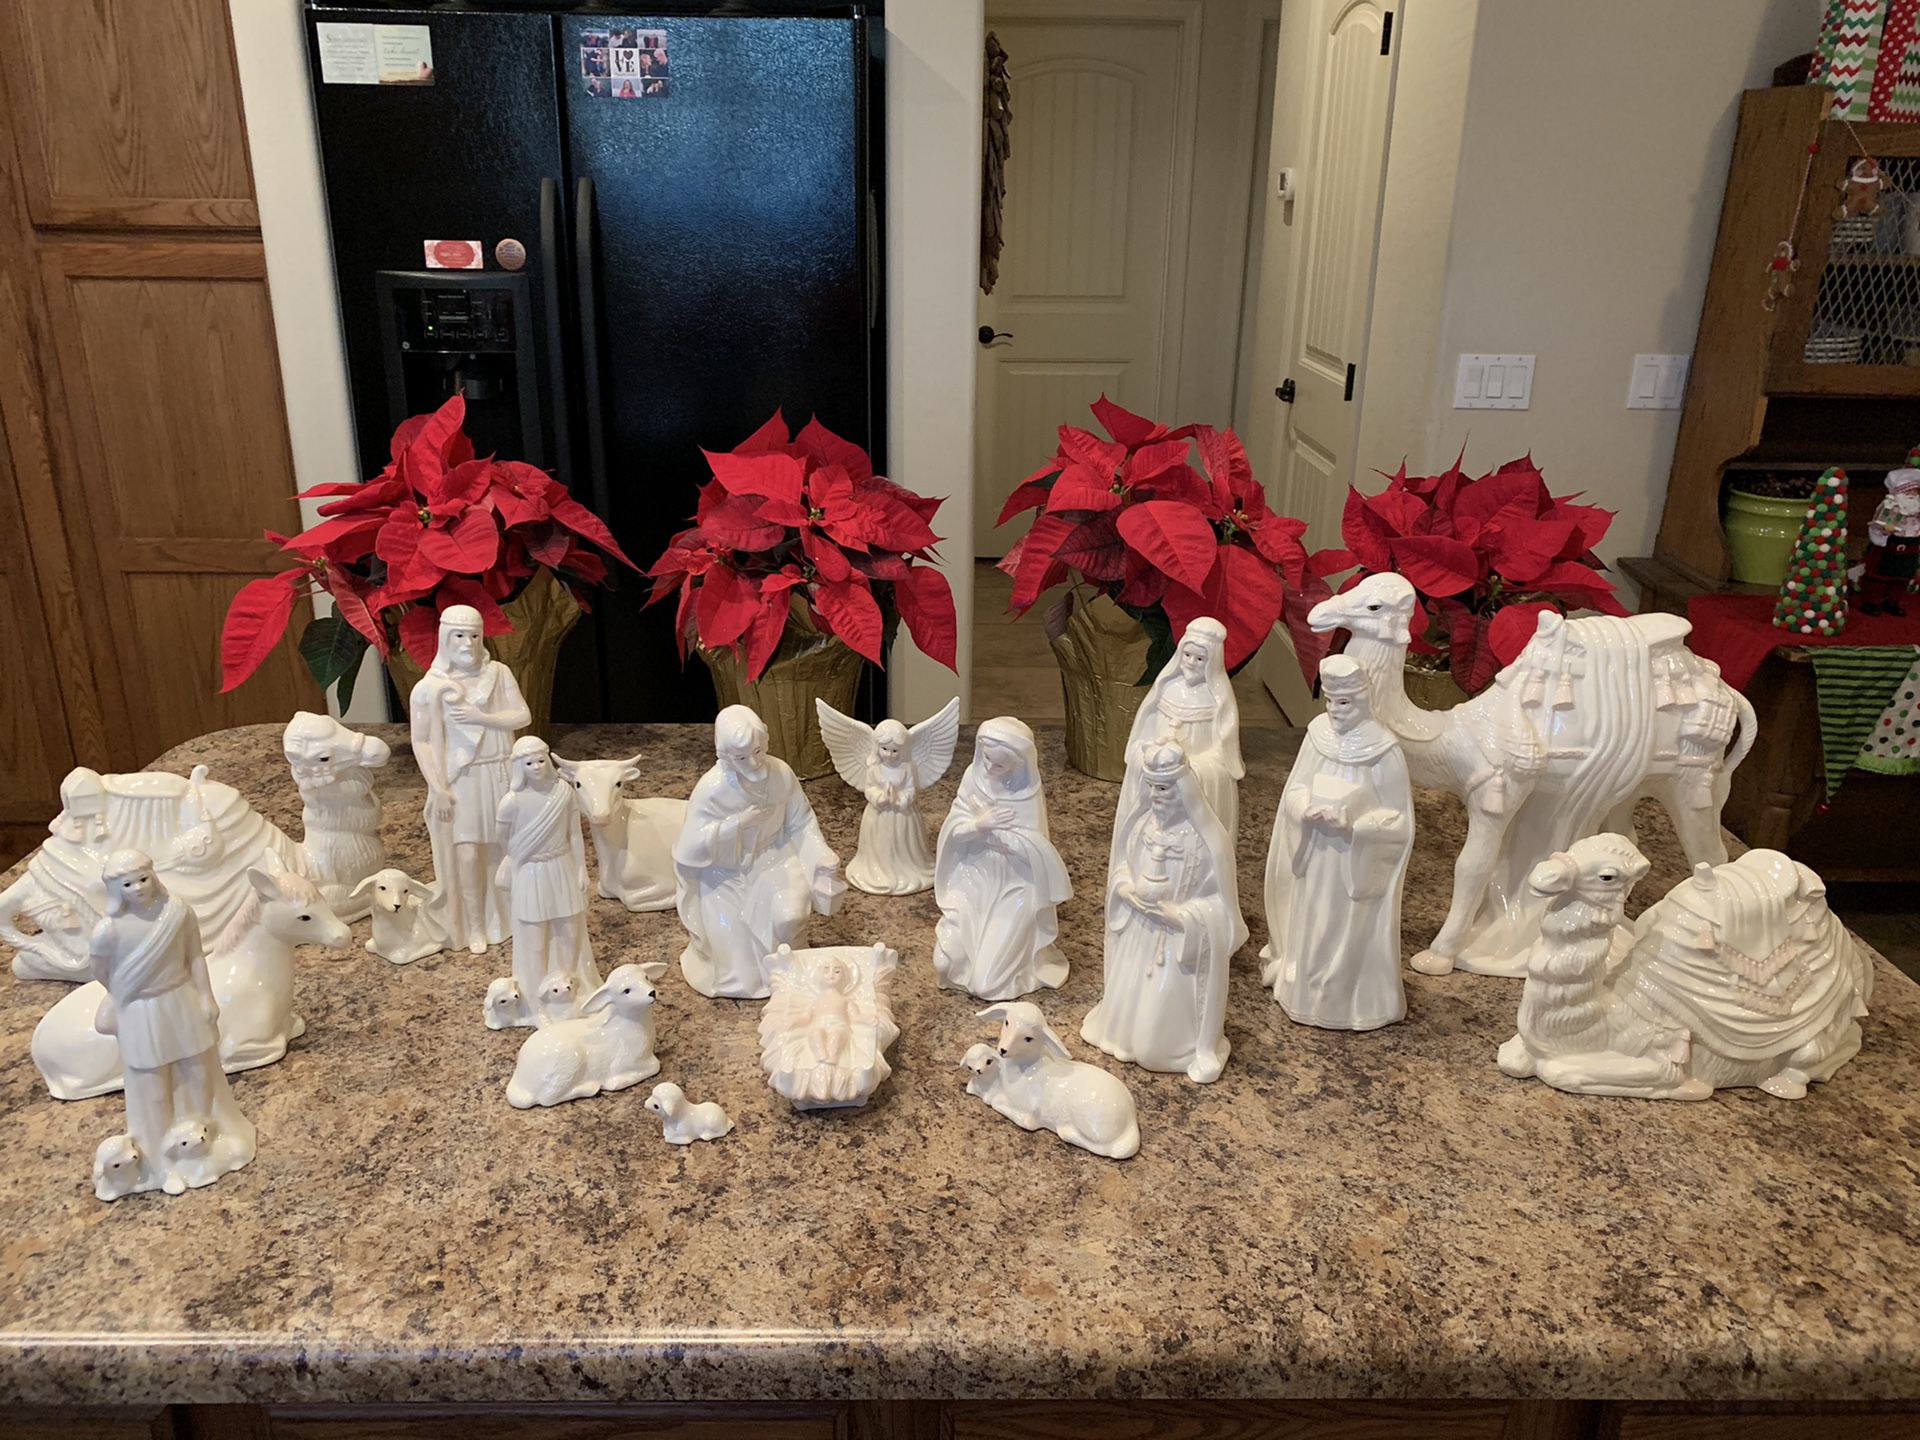 Large hand painted ceramic nativity set Christmas decor decorations 18 pieces white